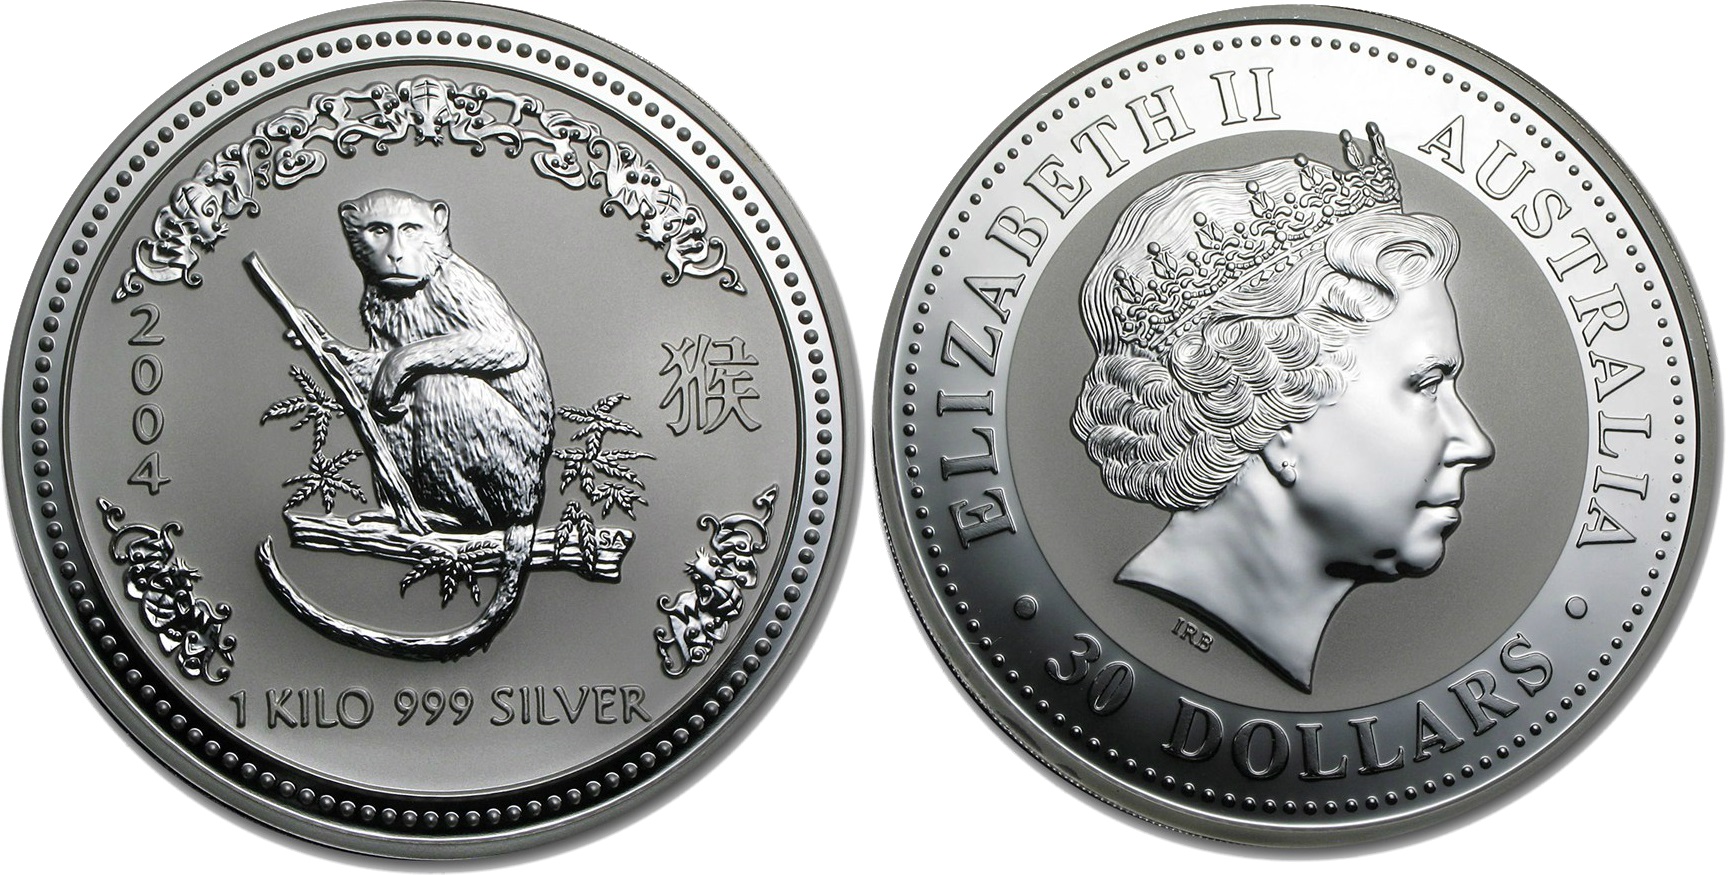 Обезьяна лунар, серебро, 1 кг, Австралия, 2004